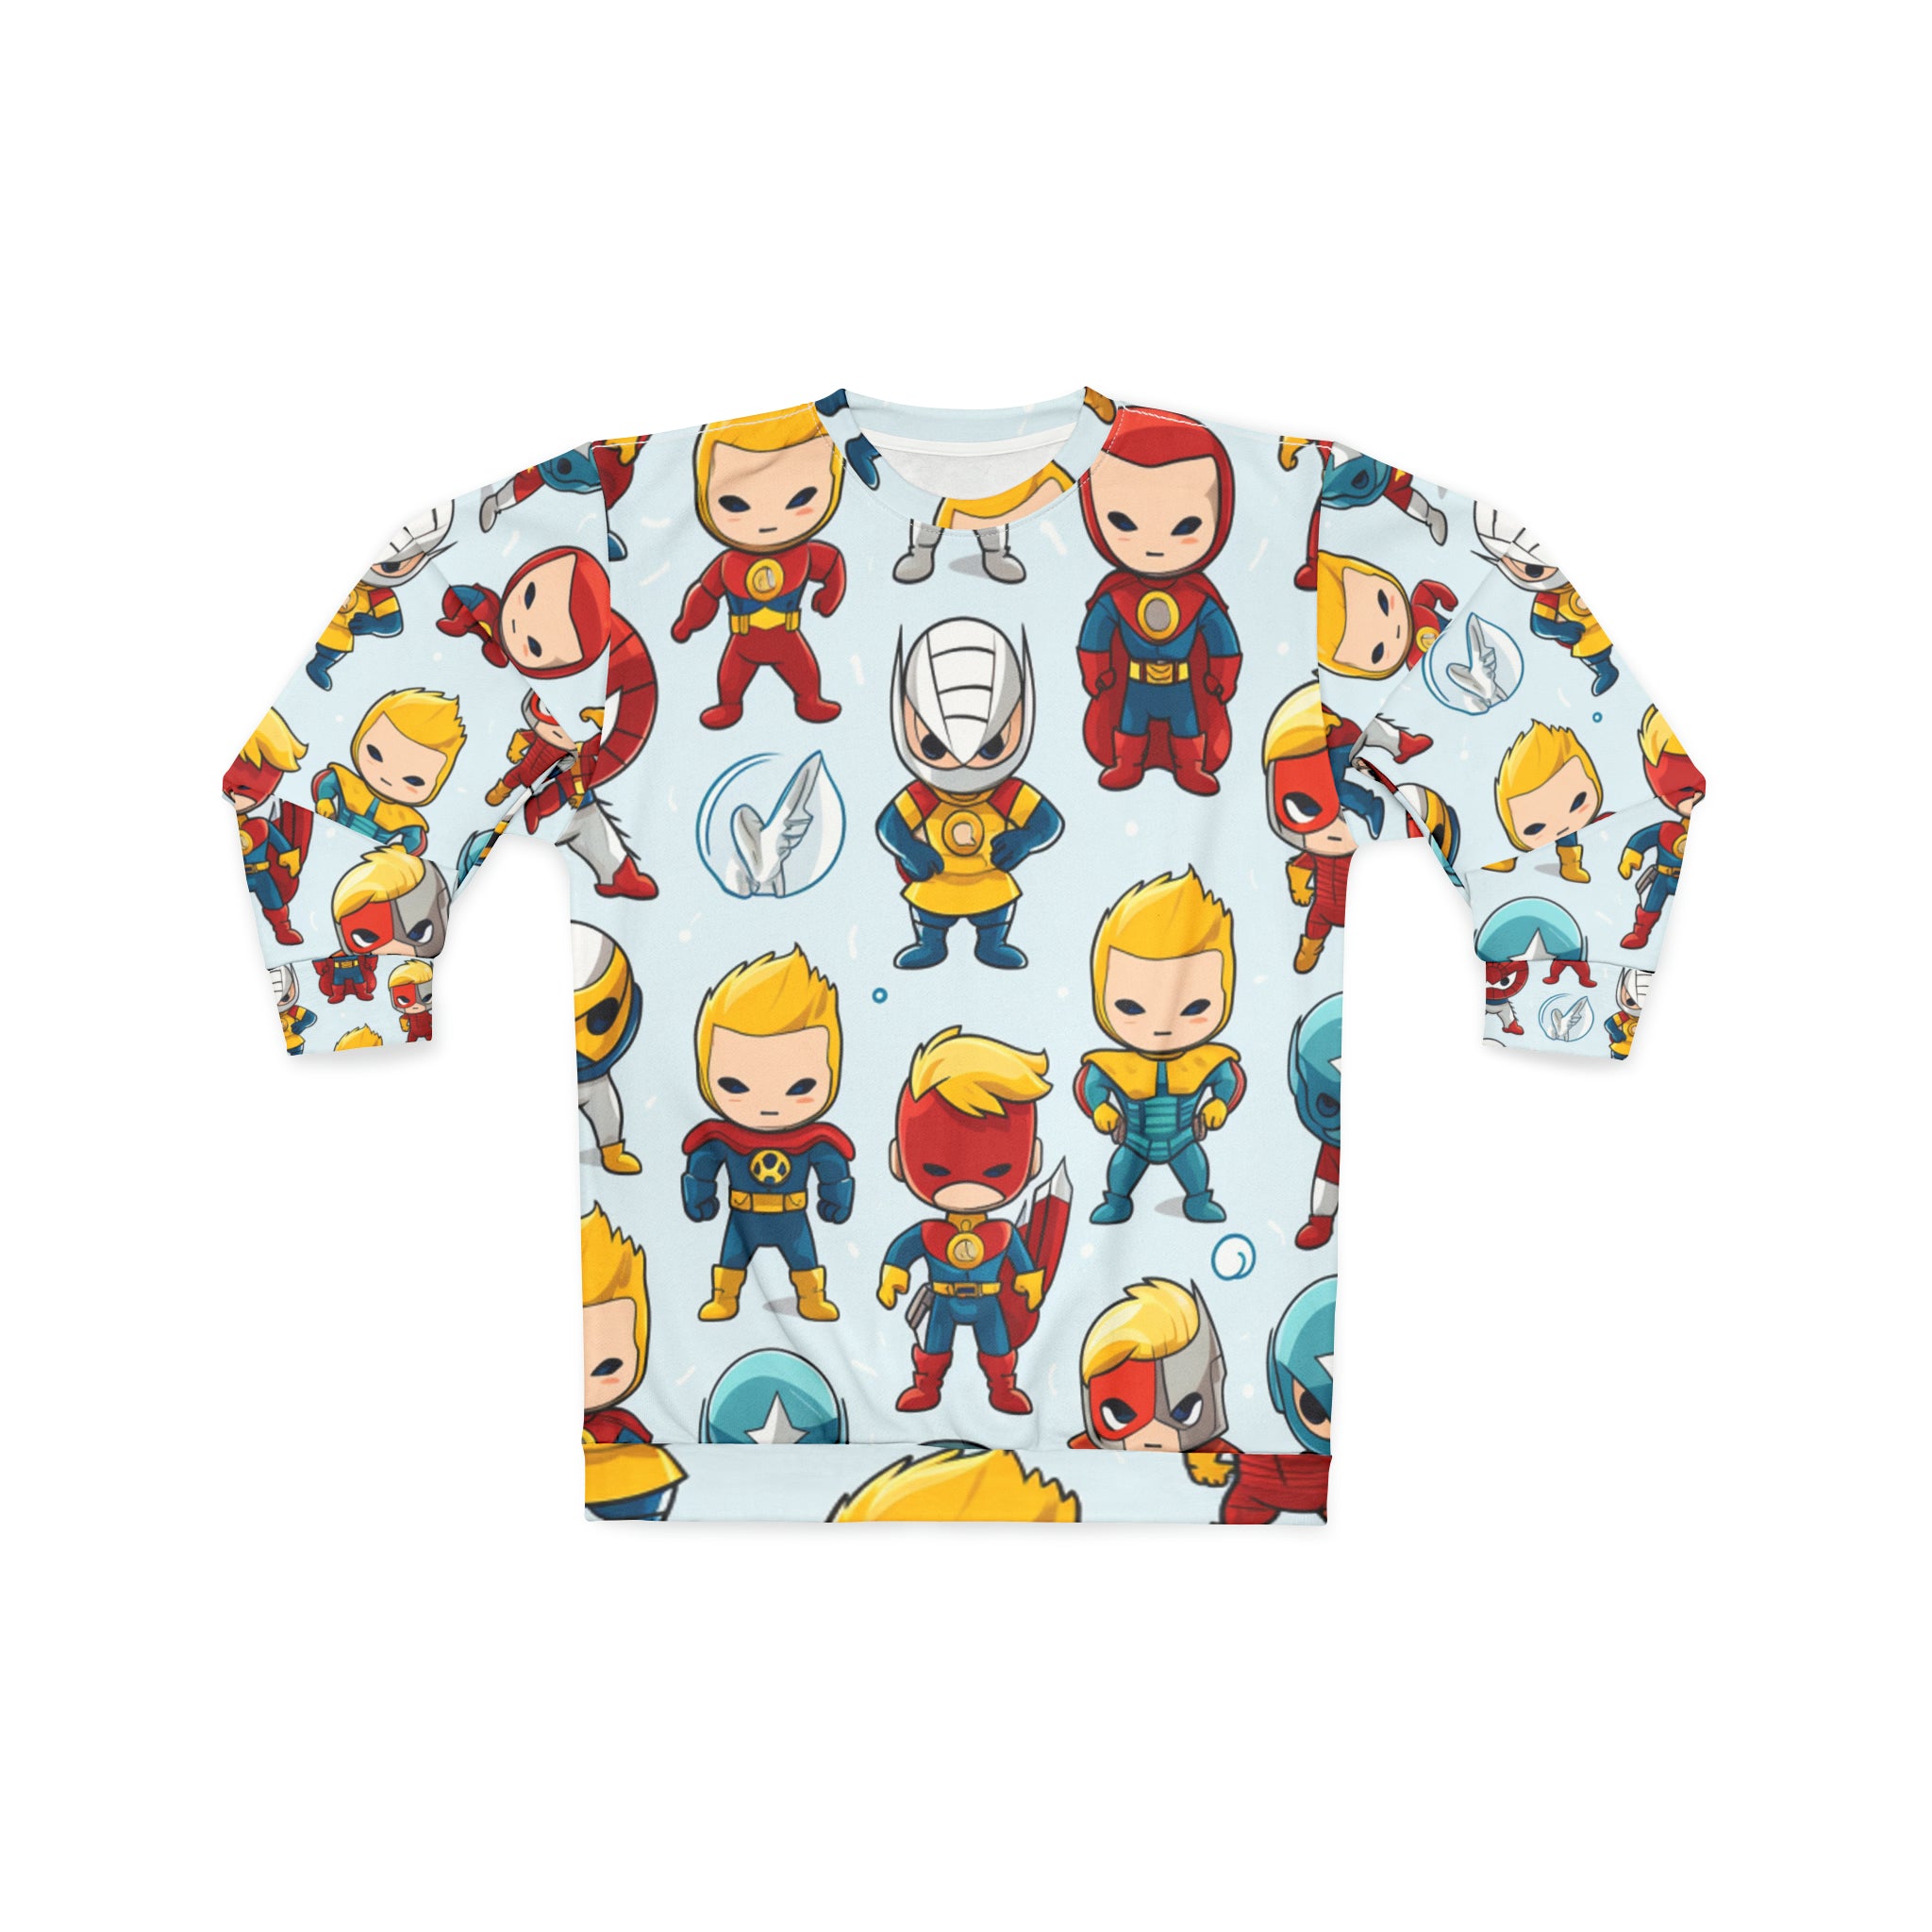 Super Heroe - Unisex Sweatshirt